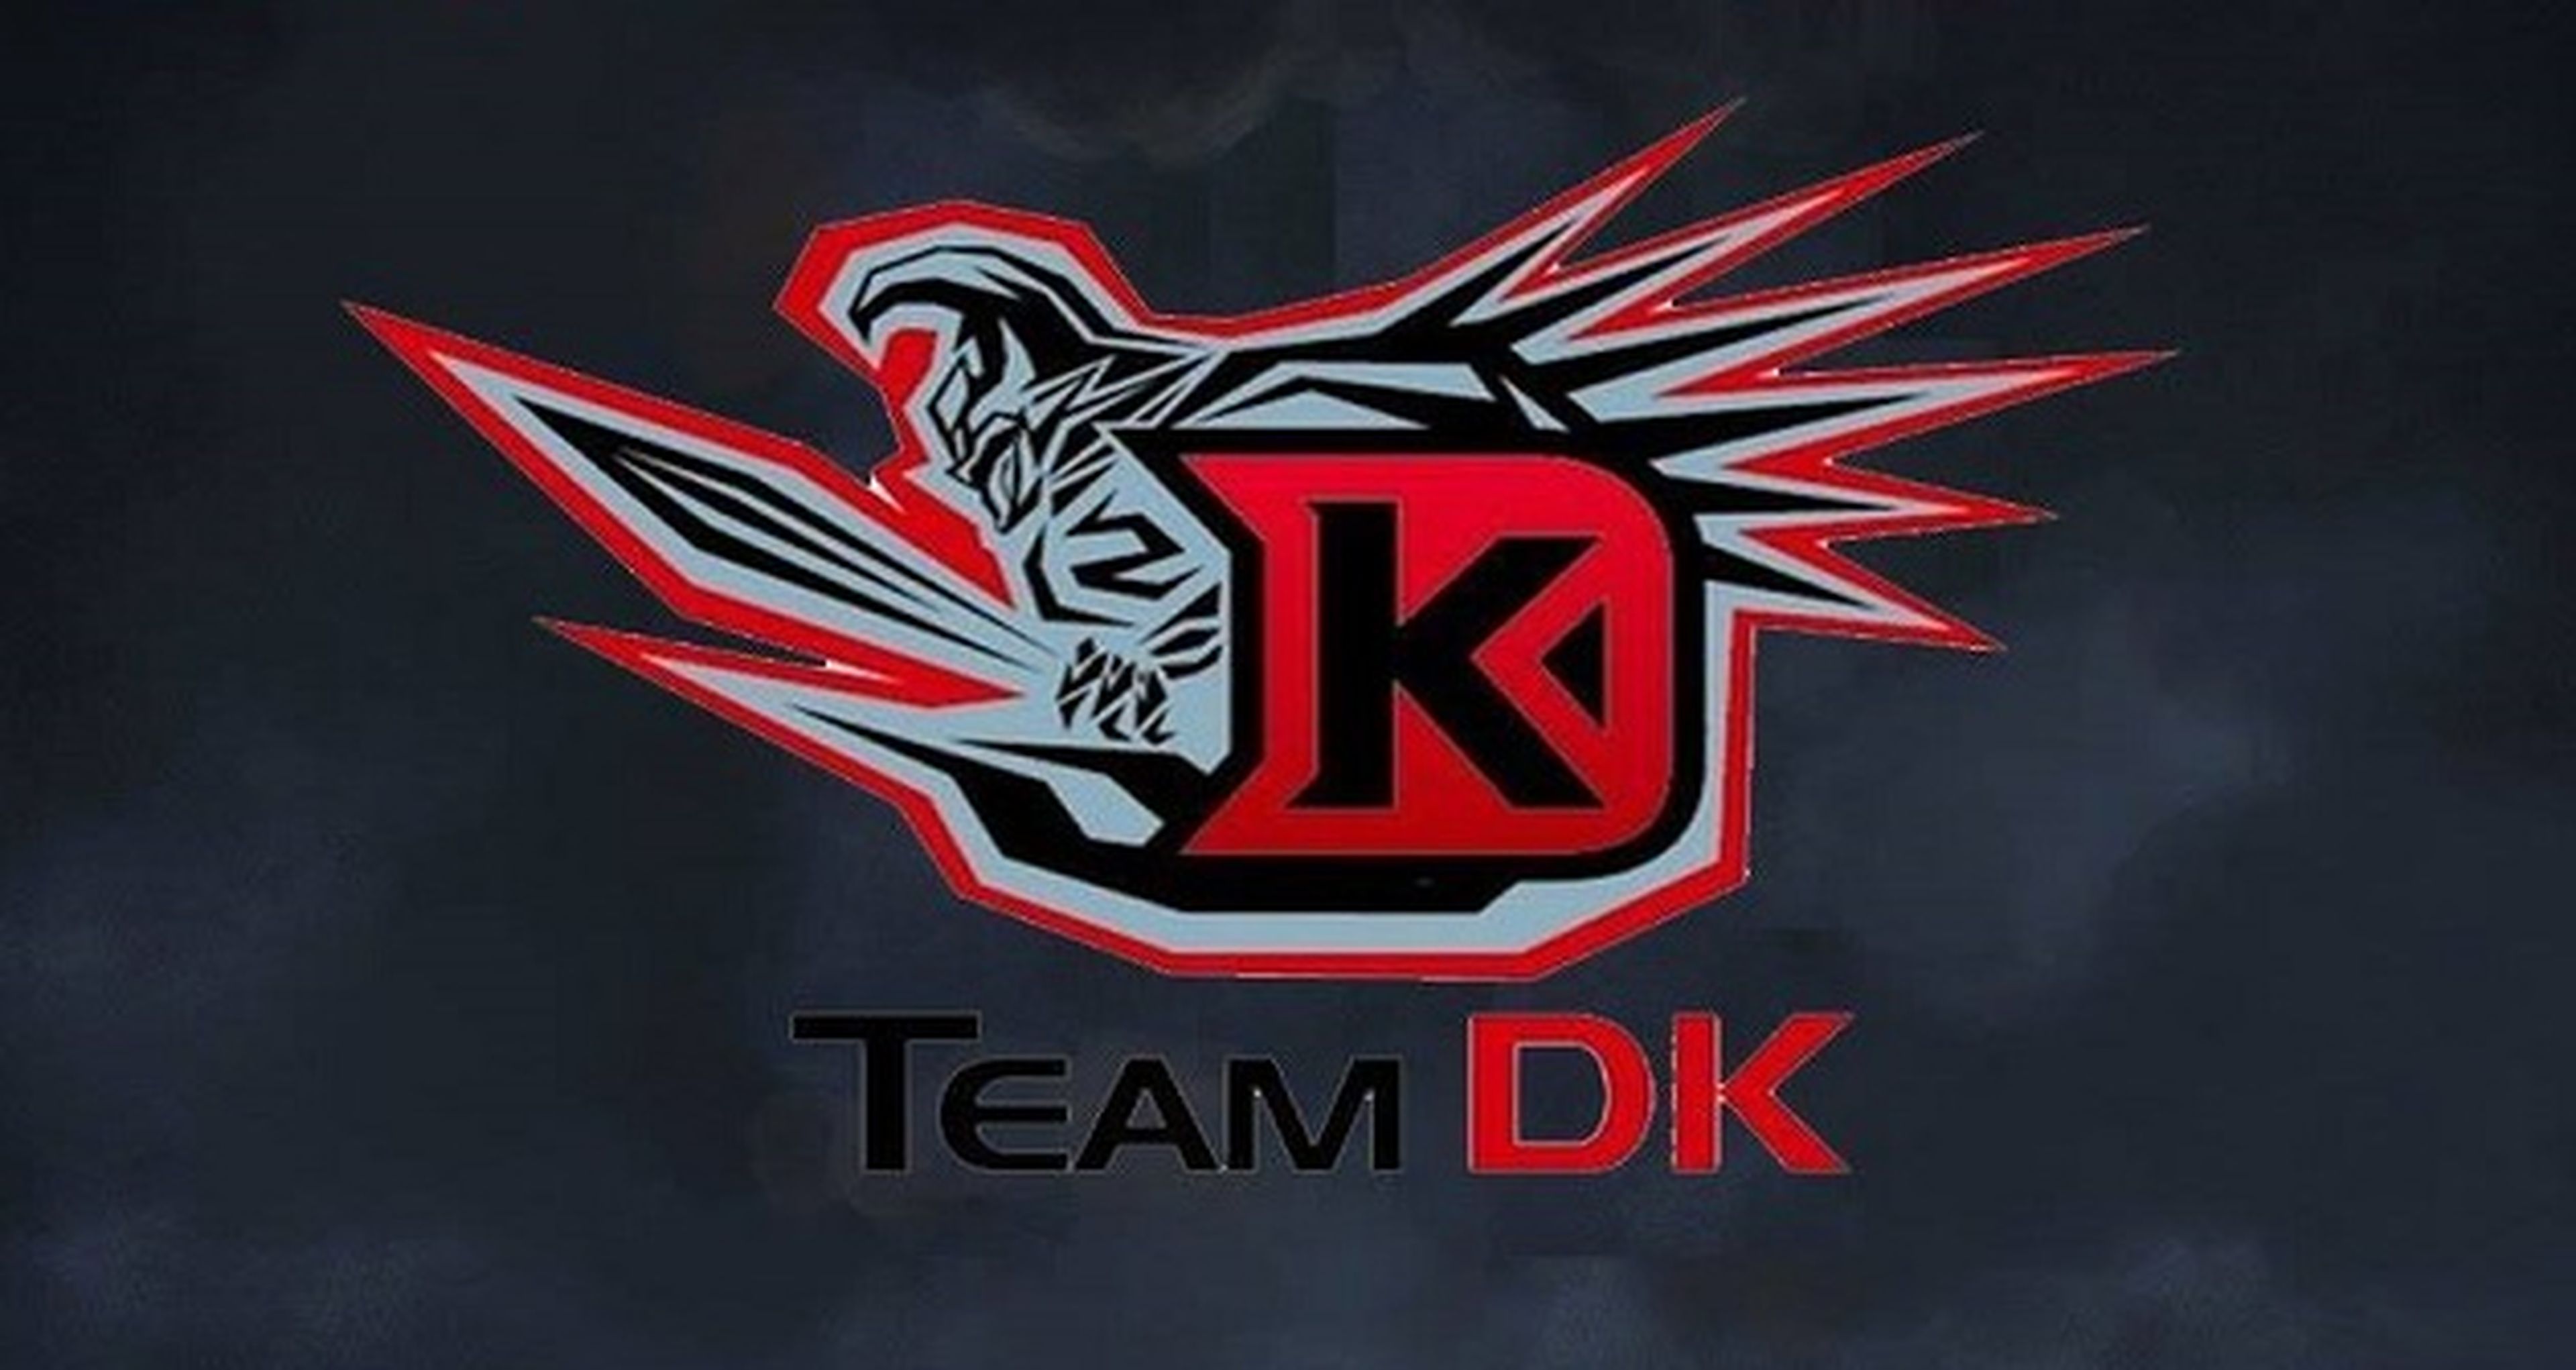 Dota 2 dice adiós a Team DK